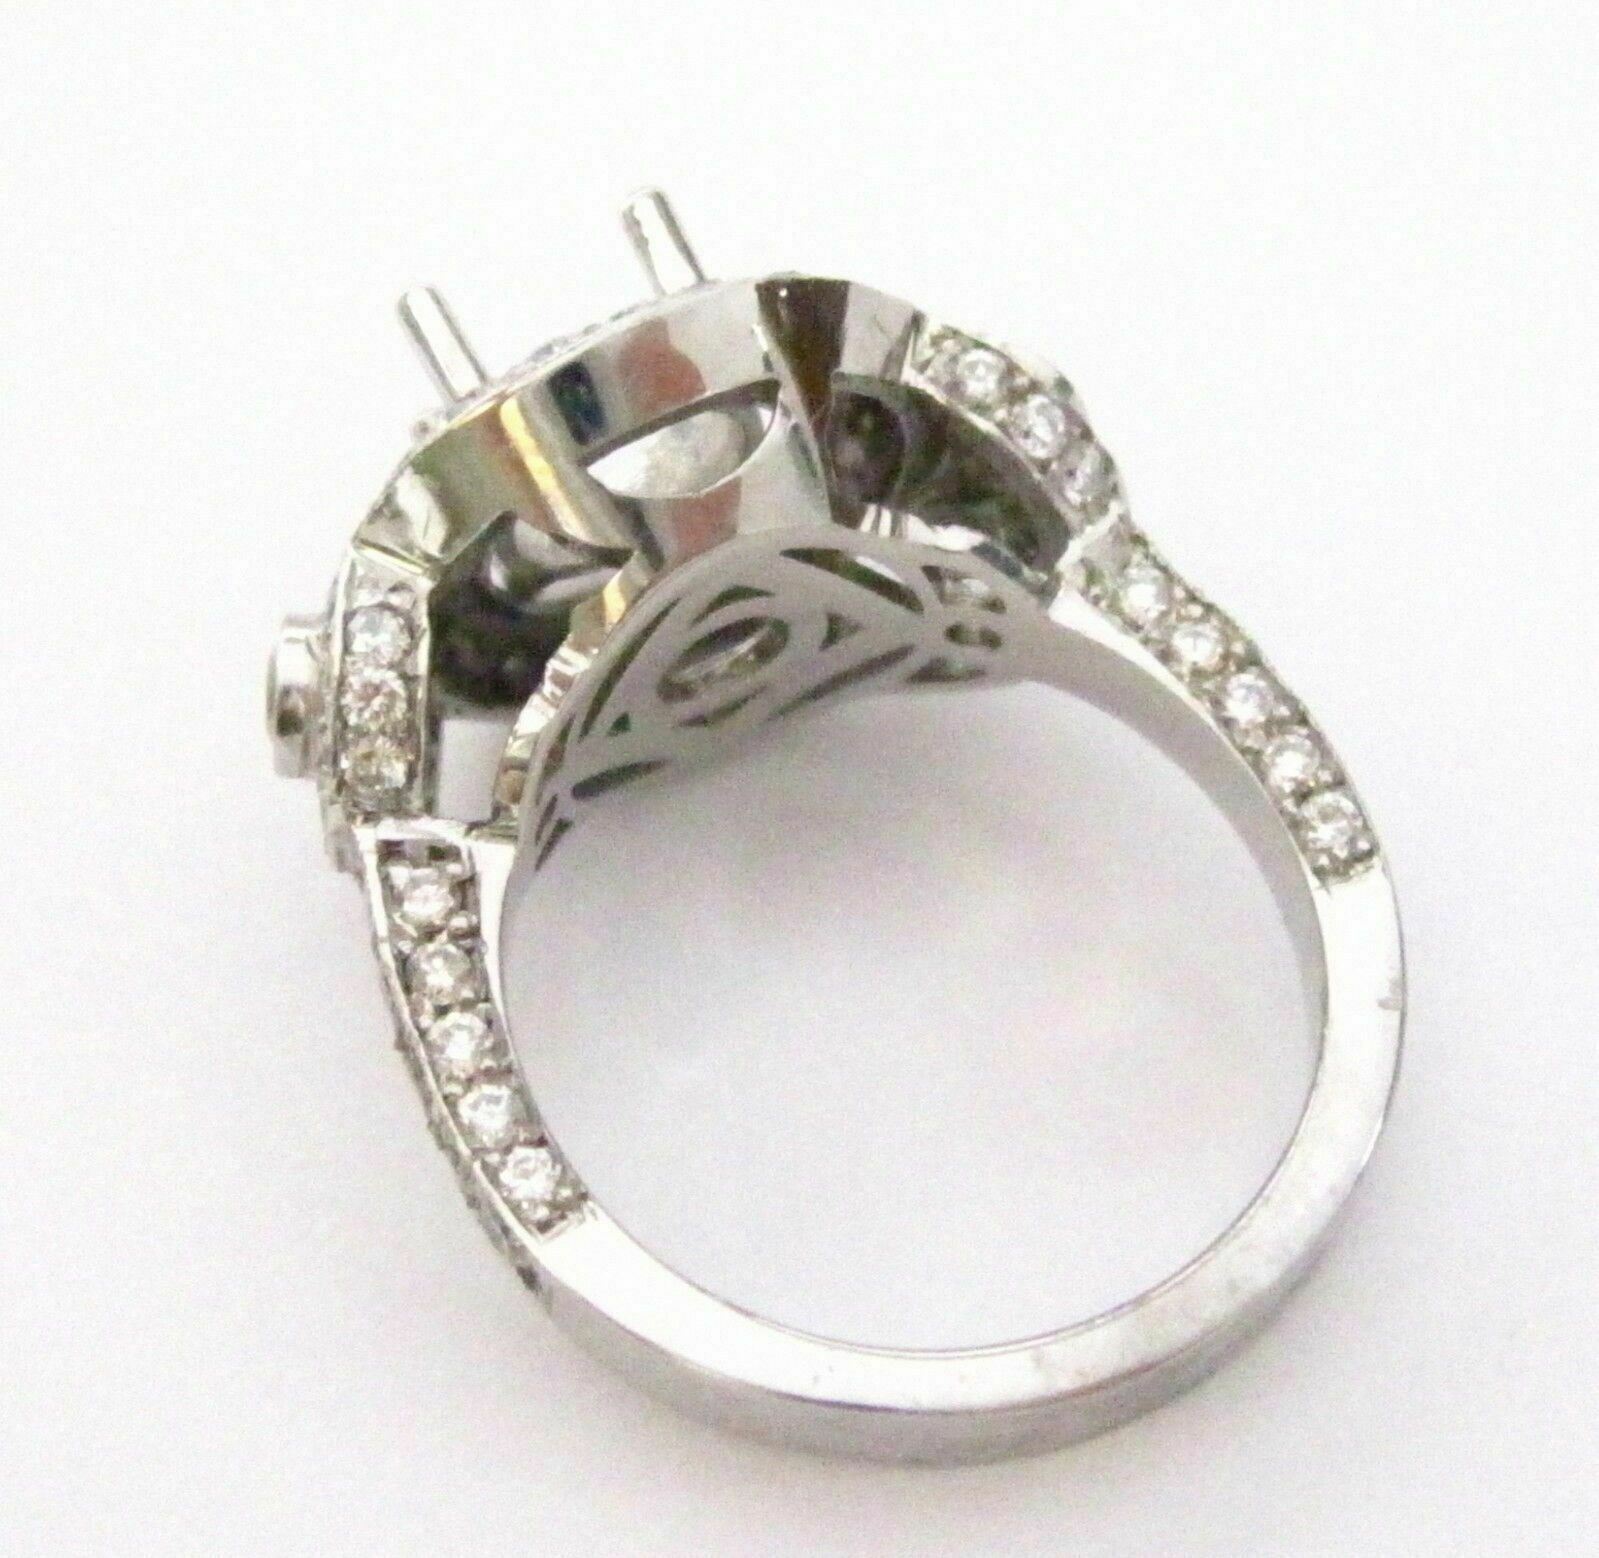 Fine 4 Prongs Semi-Mounting Round Diamond Ring with Natural Yellow Diamonds